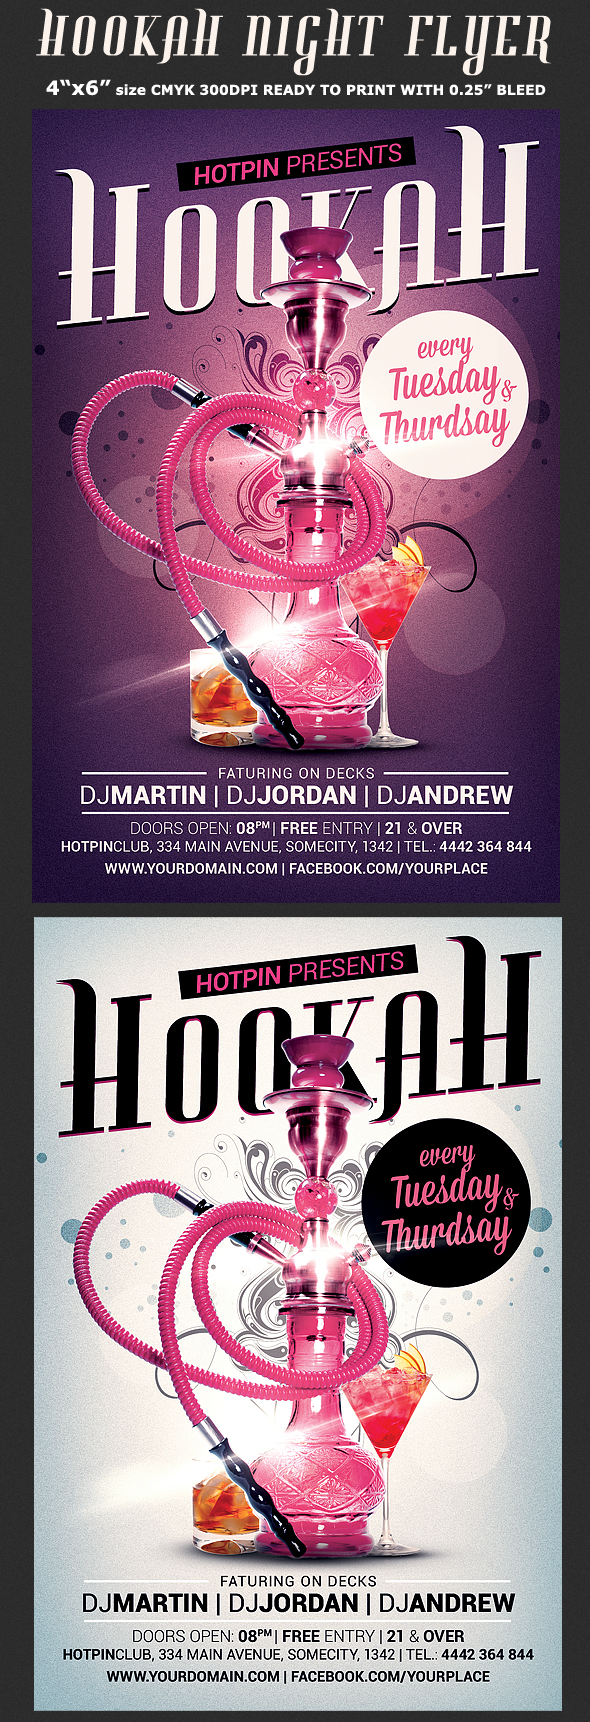 bar Event hookah hookah event flyer hookah night lounge modern nargile nightclub shisha summer